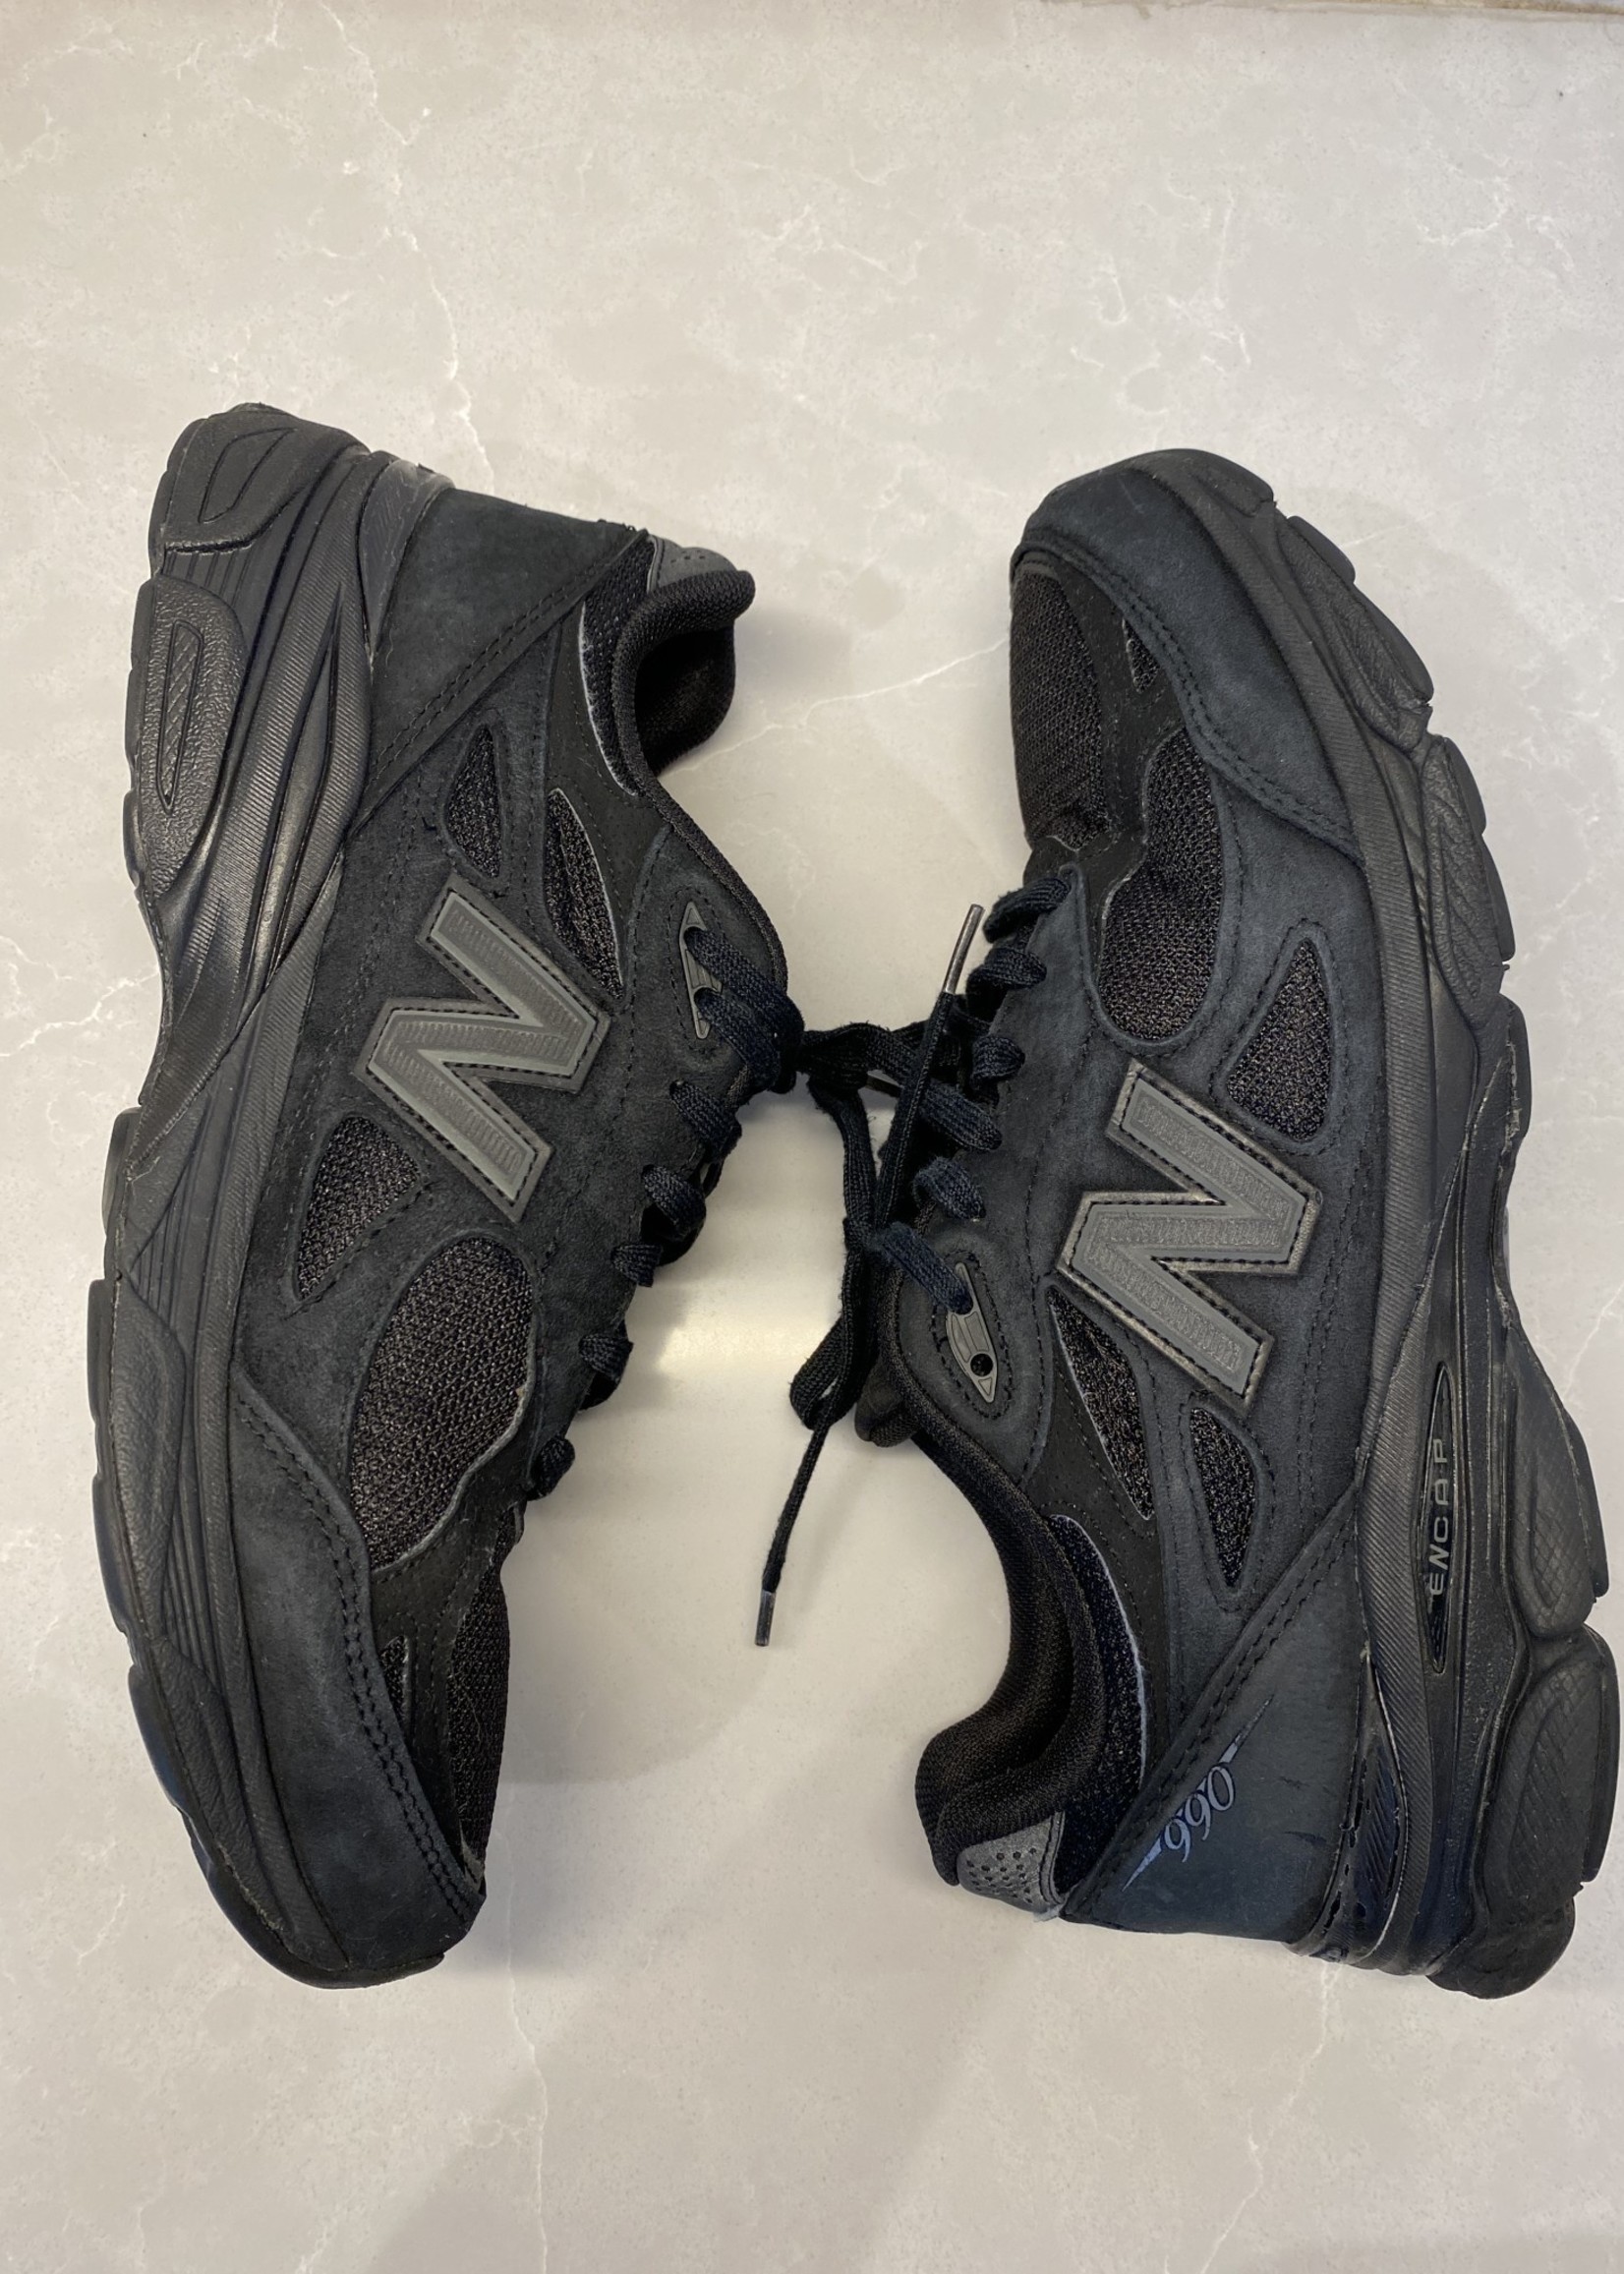 New Balance 990s Triple Black Sneakers 10.5